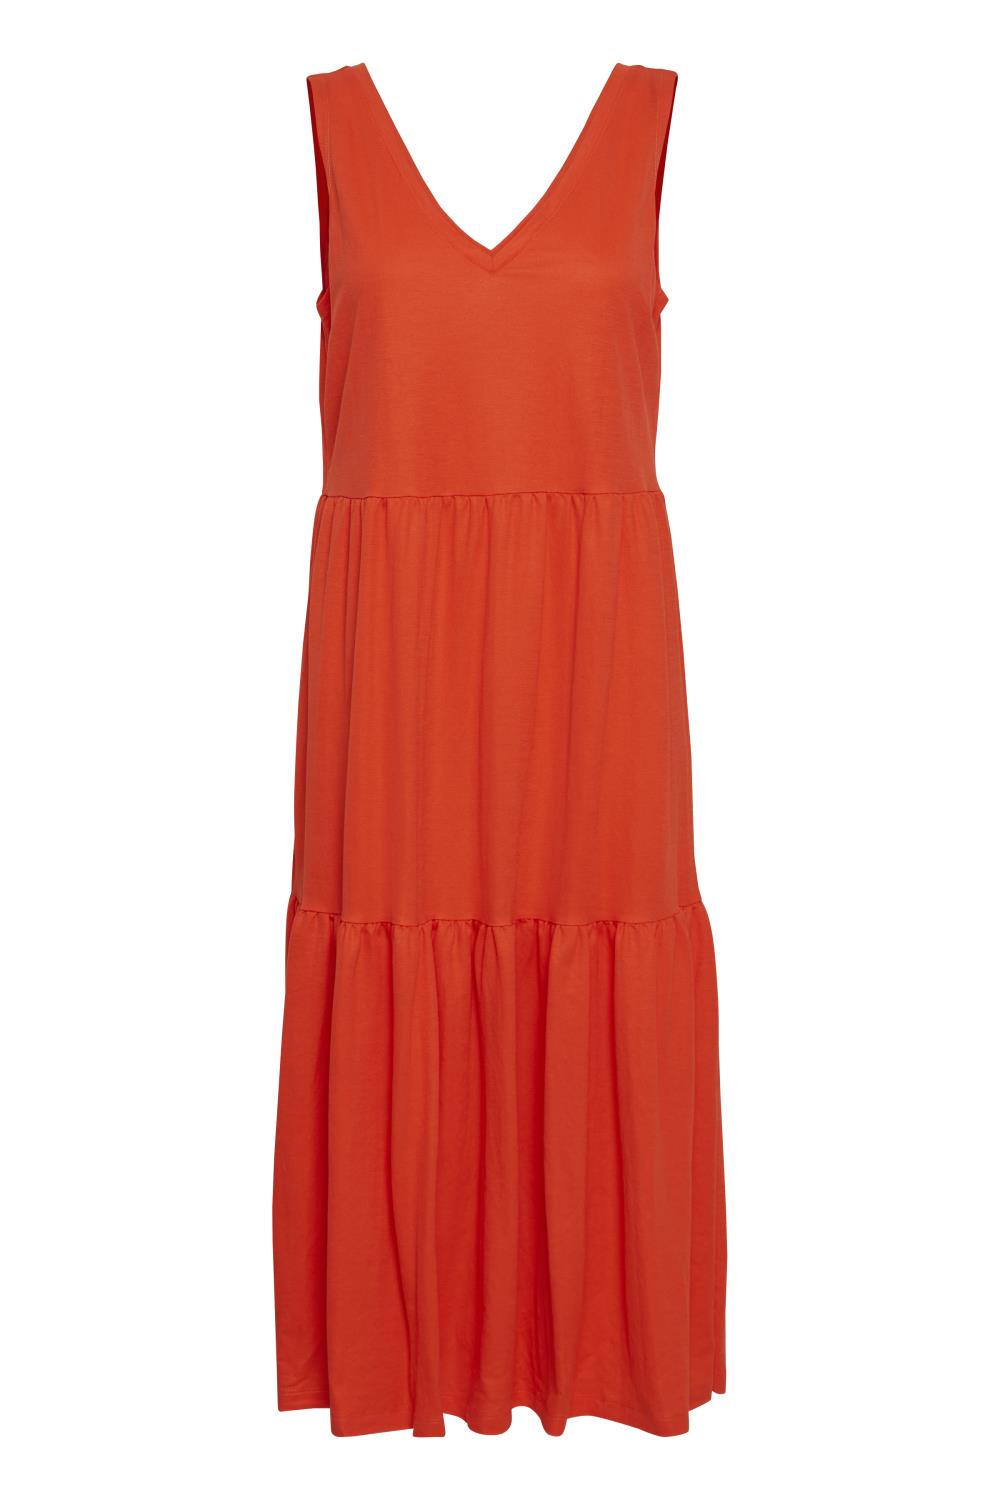 Pulz Amelia Dress, orange kappe kjole